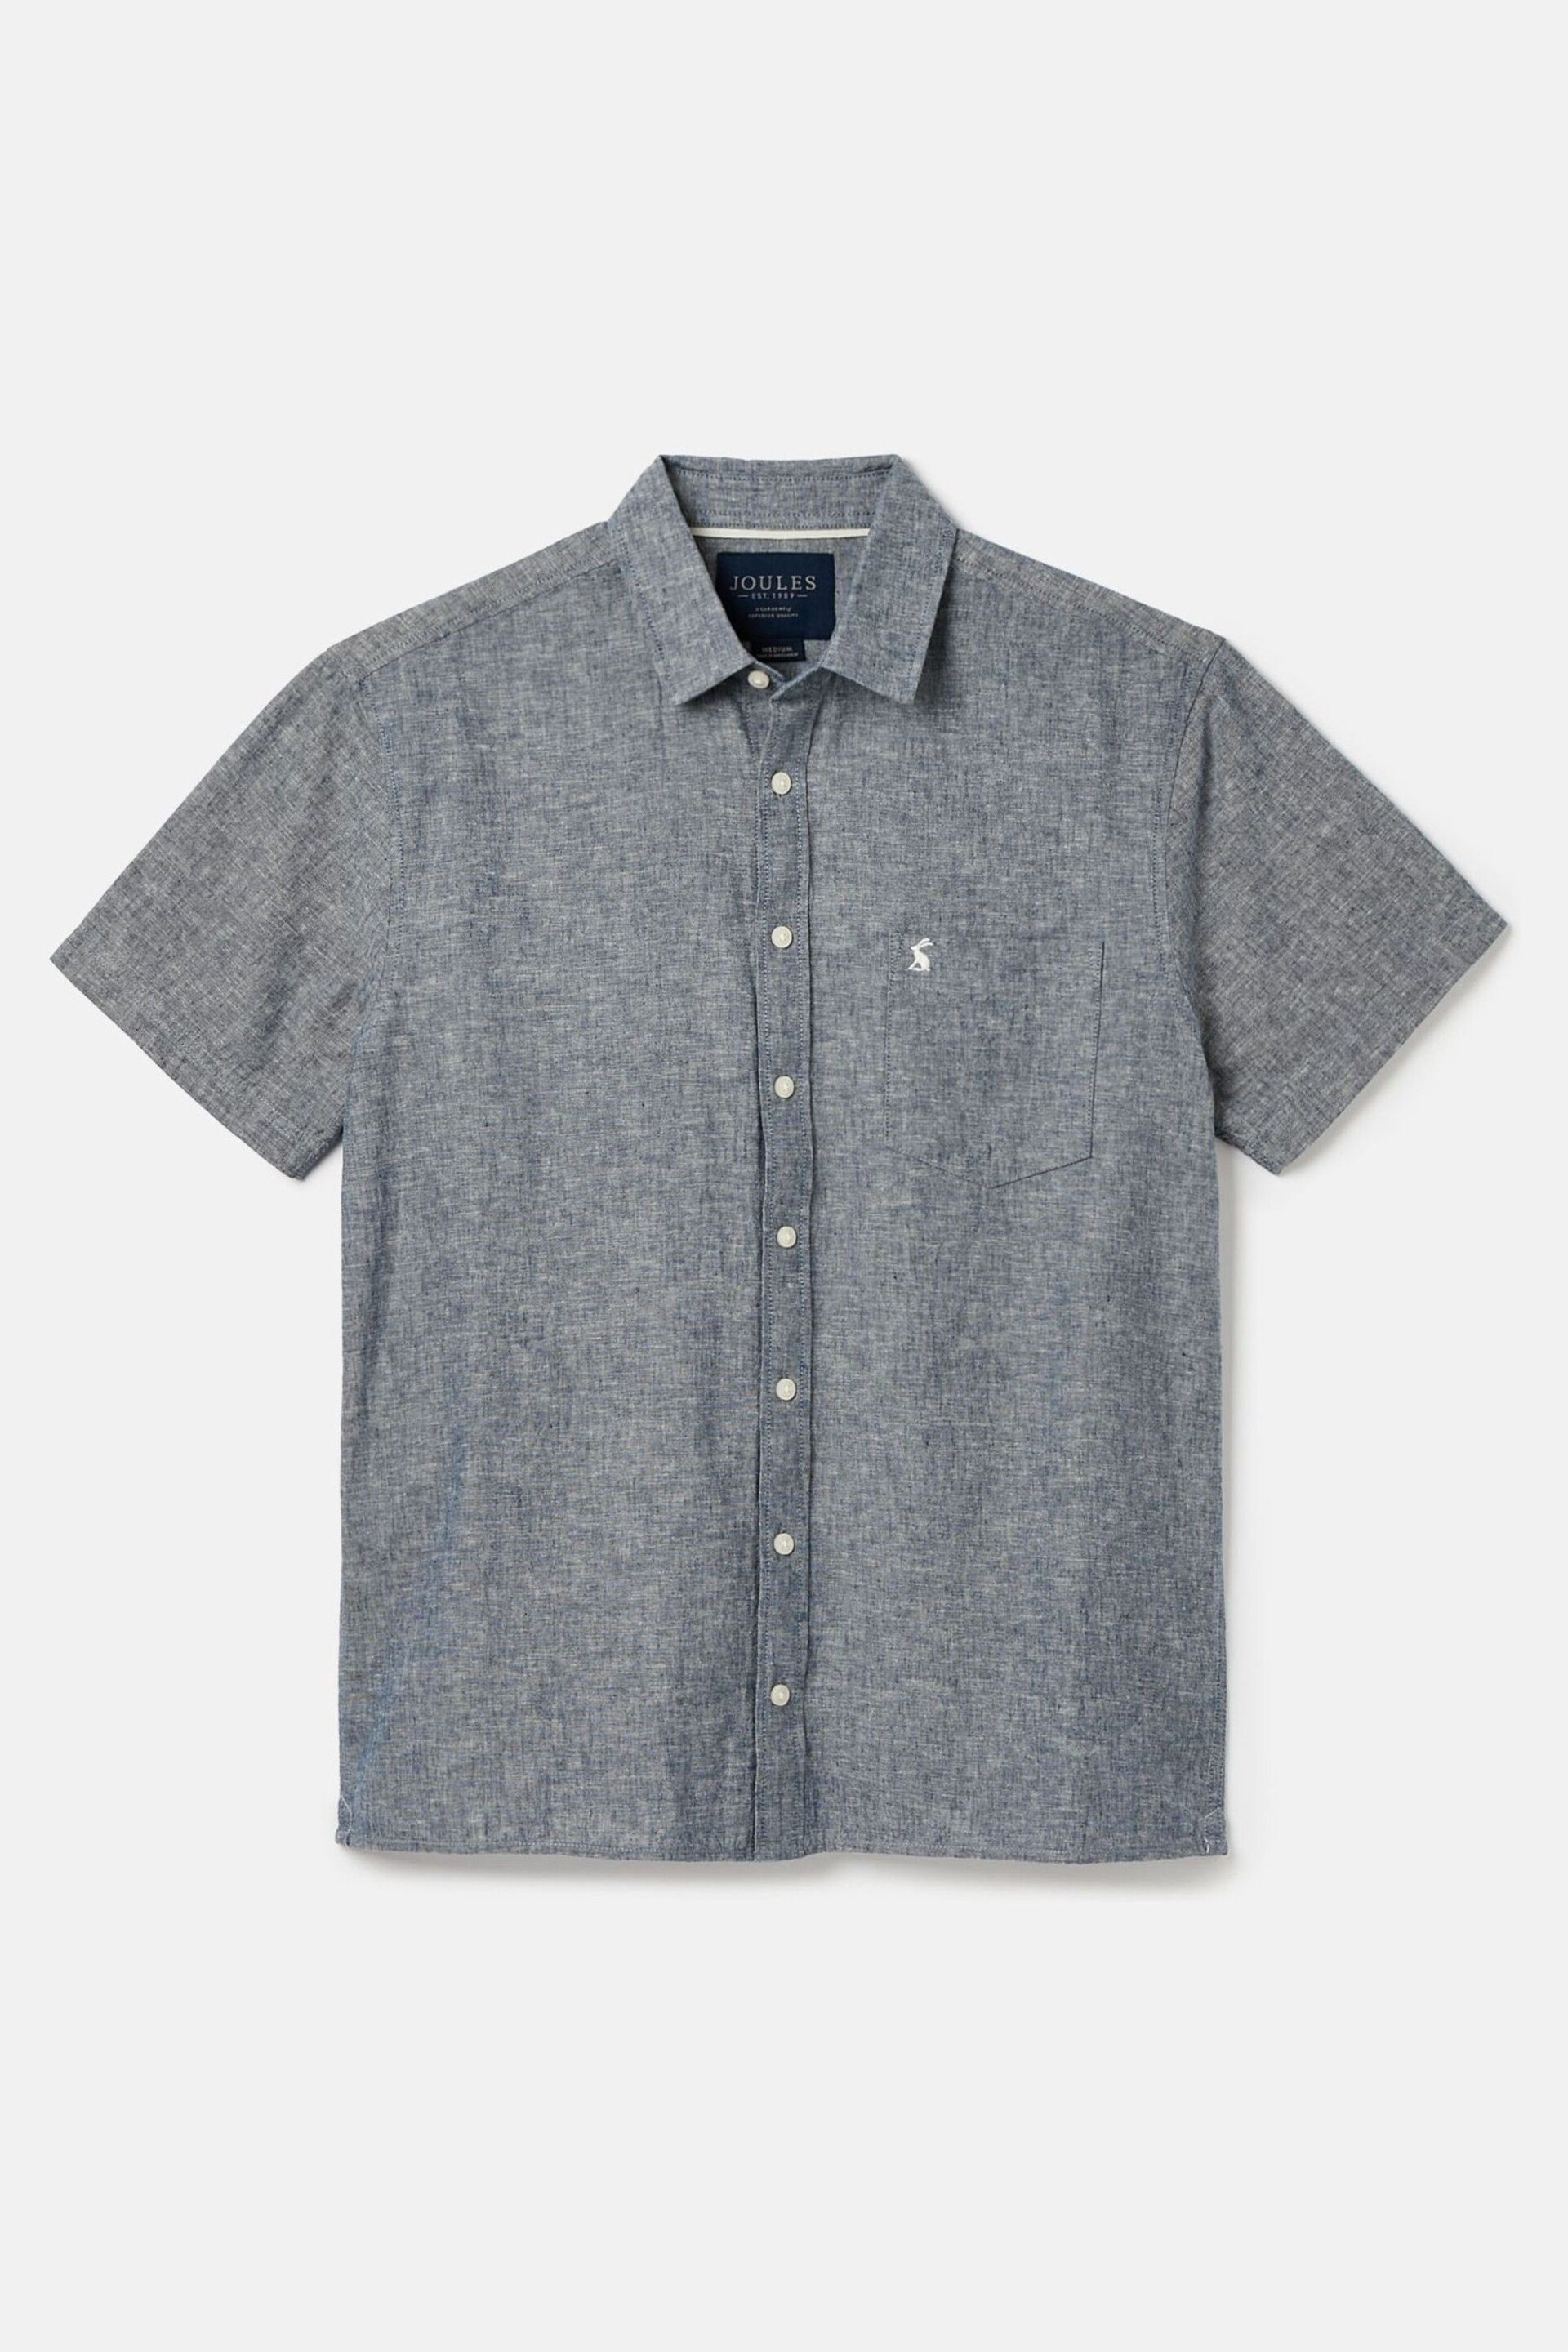 Joules Linen Blend Blue Plain Short Sleeve Shirt - Image 7 of 7